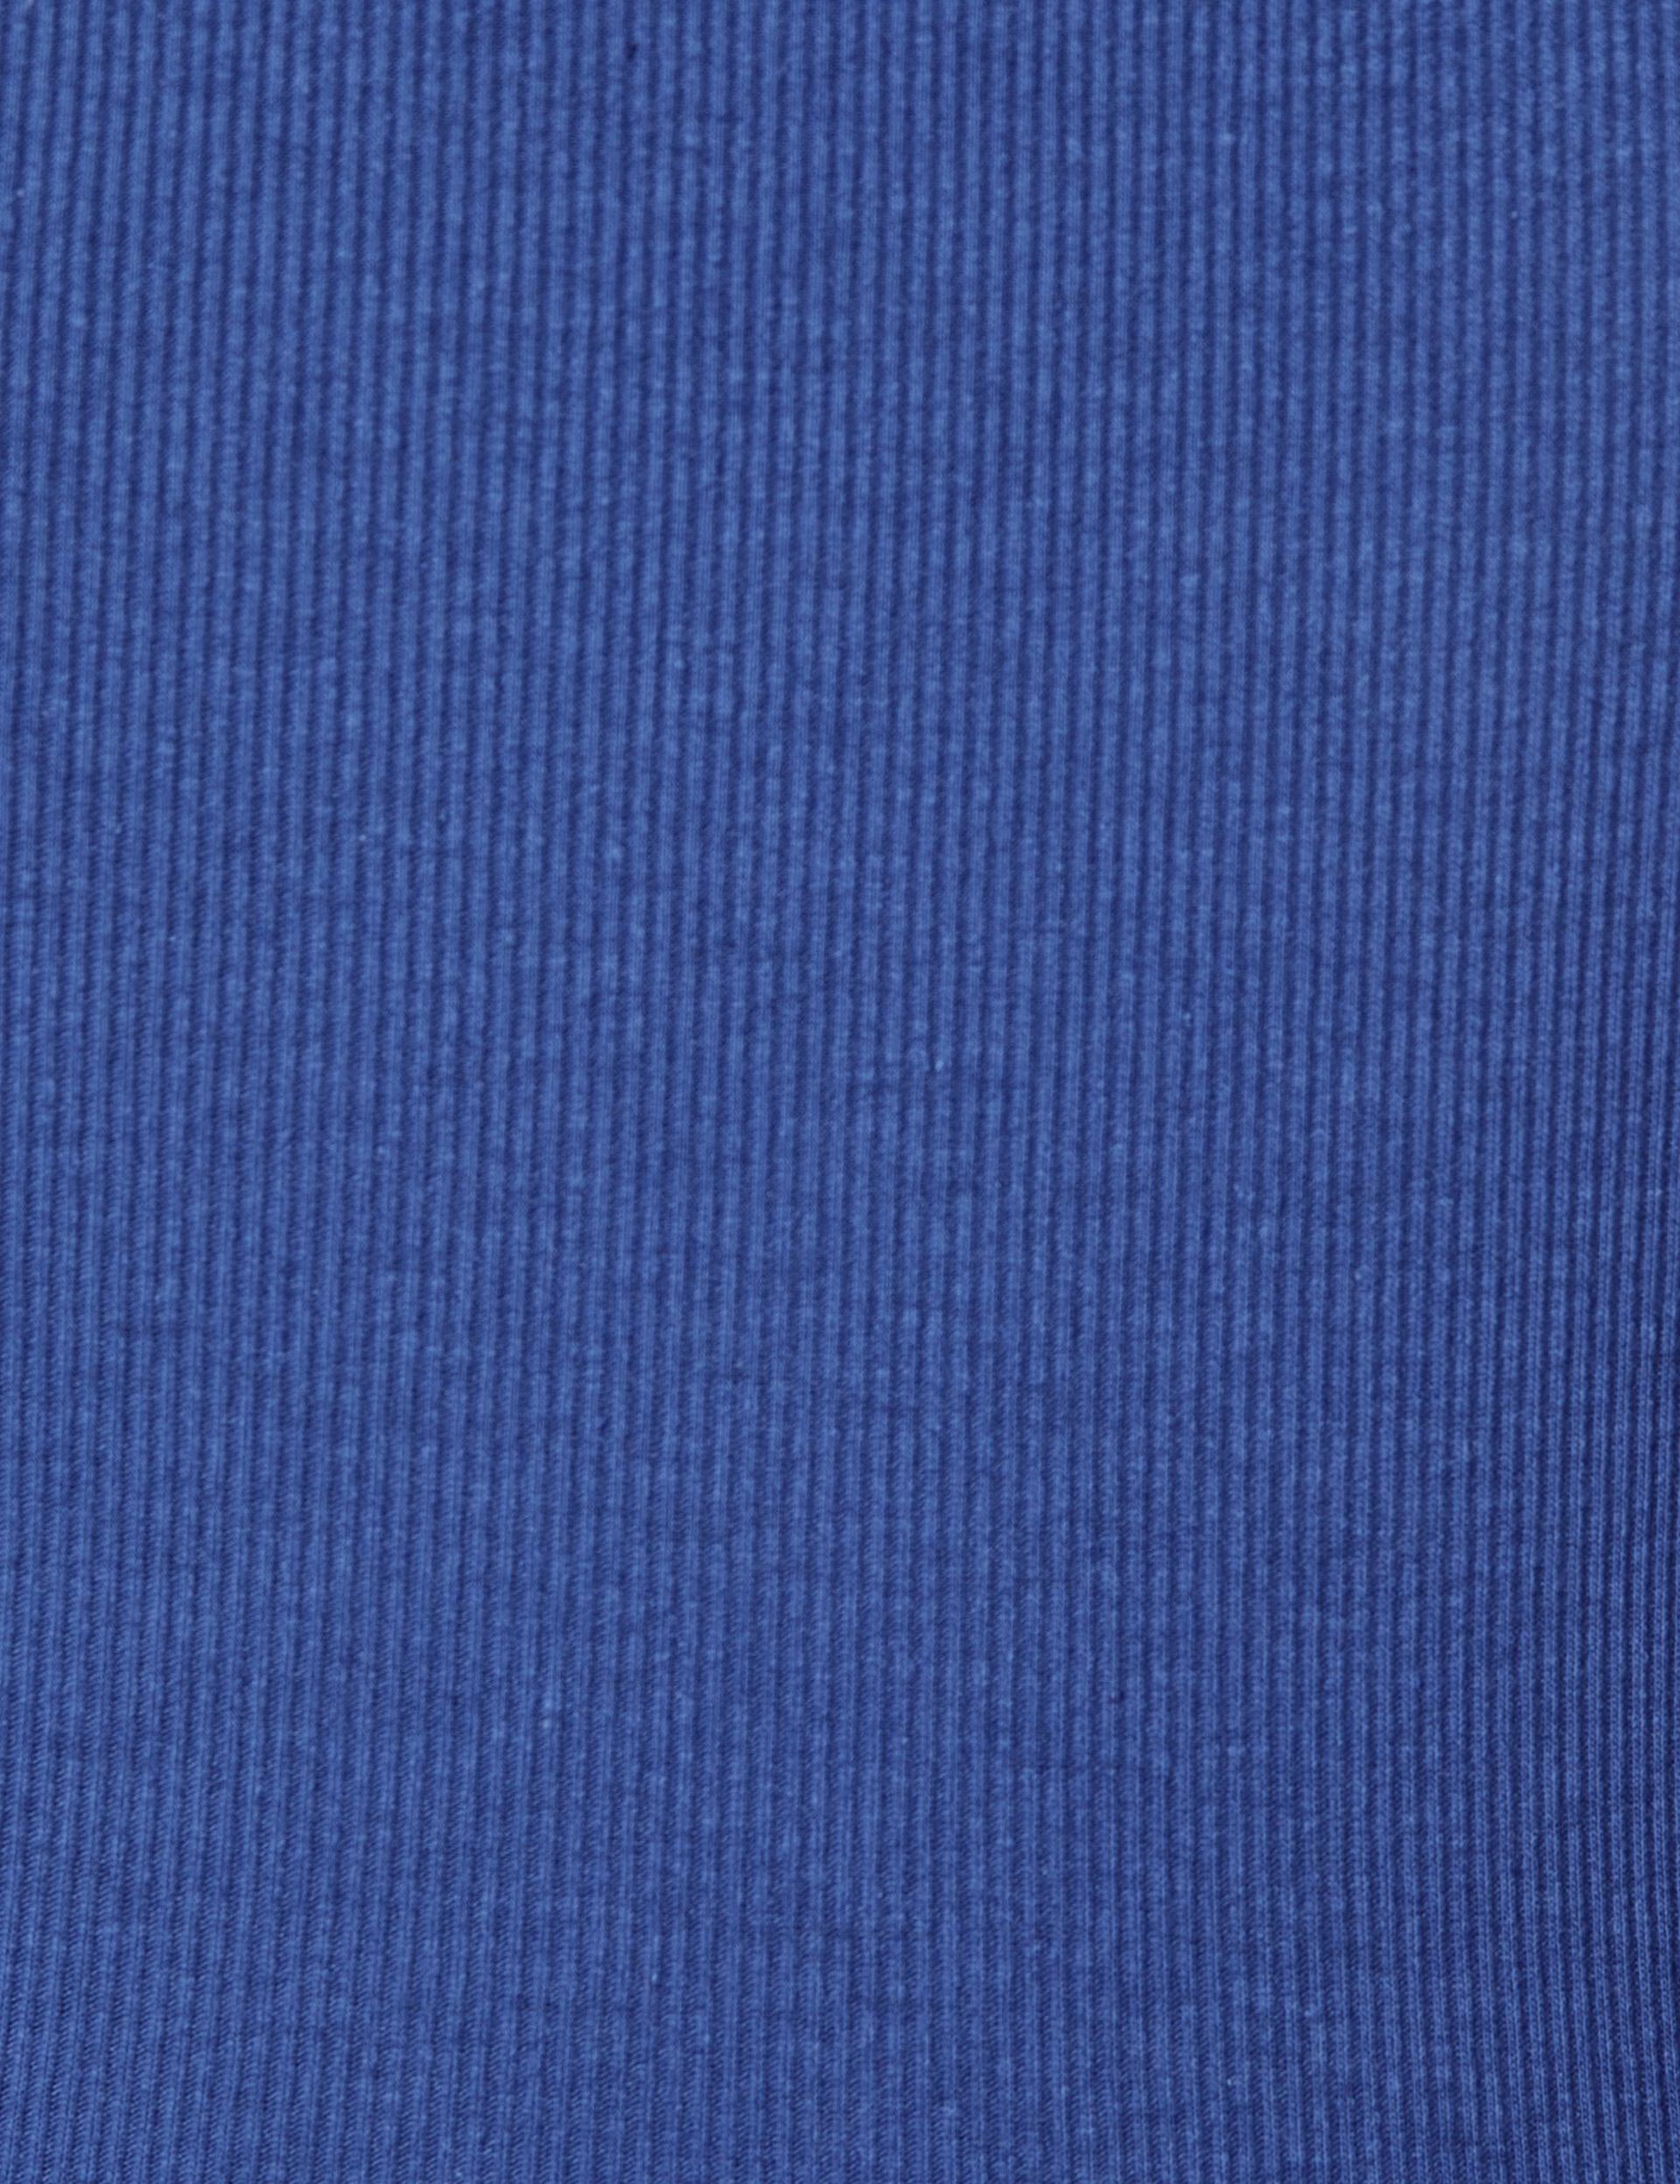 Tee-shirt bleu indigo côtelé basic